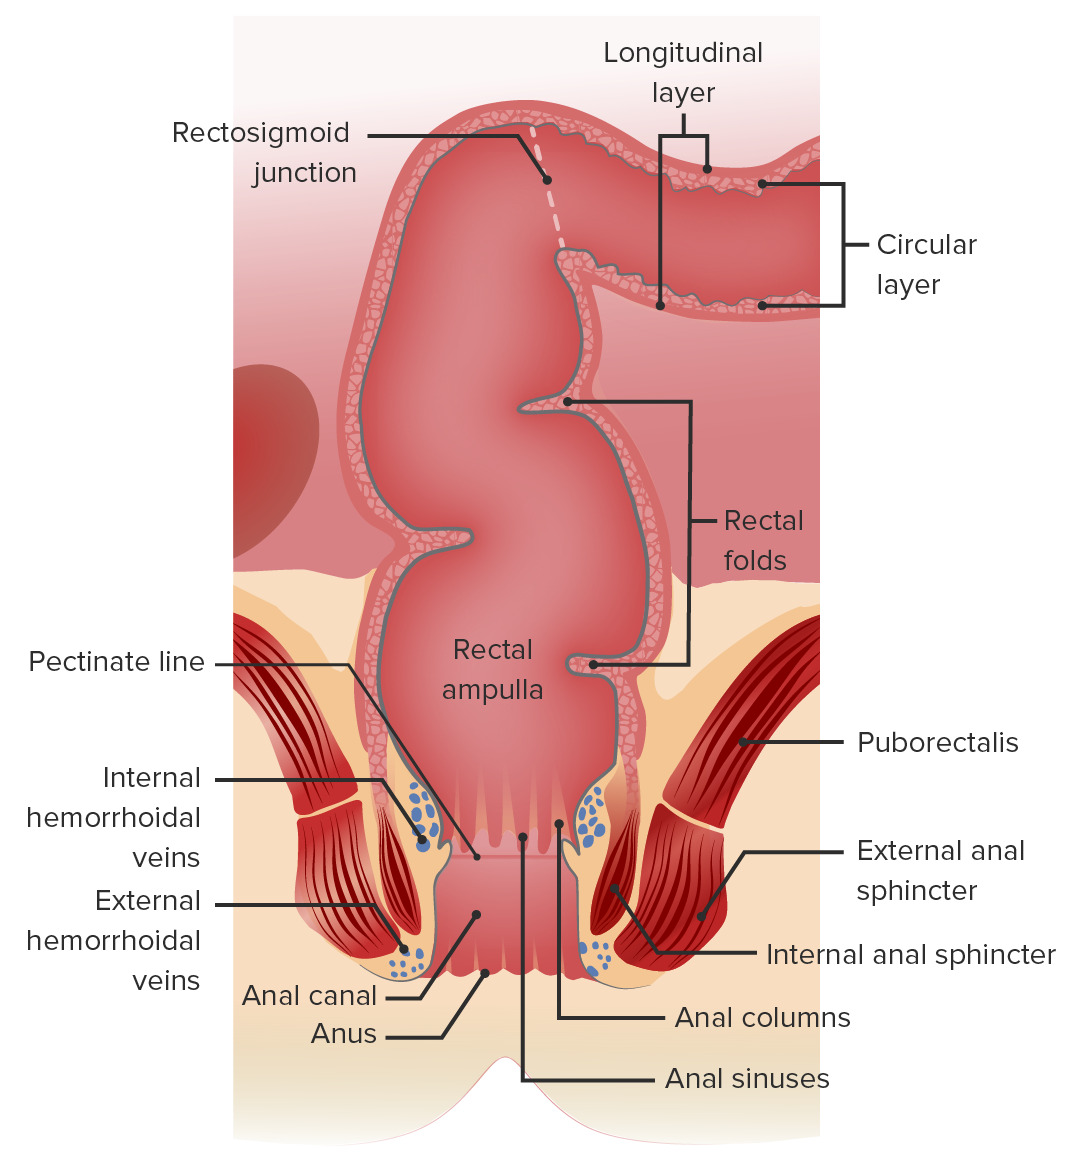 Anatomia macroscópica do reto e canal anal